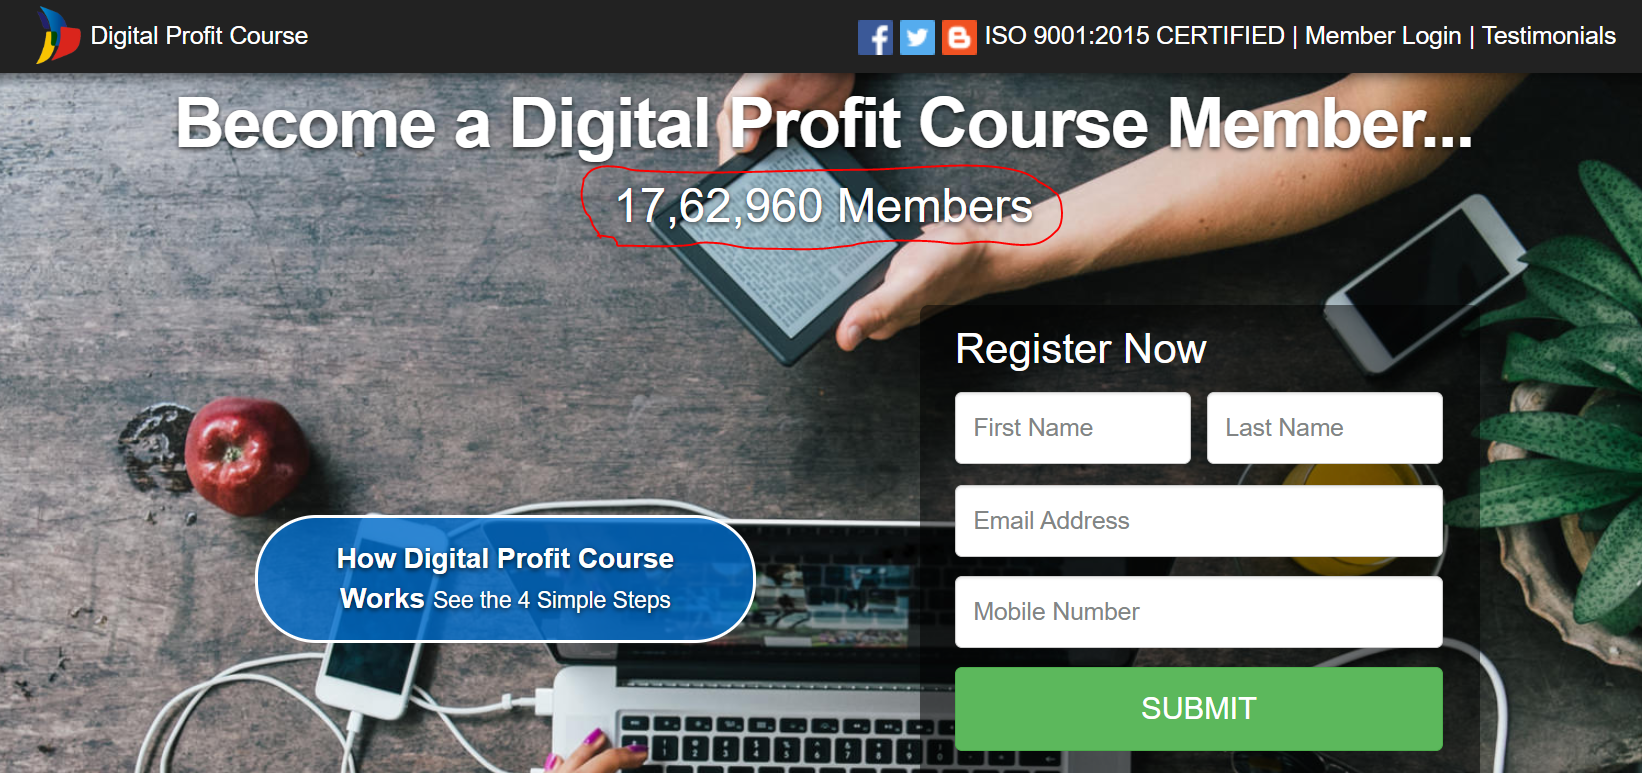 Digital Profit Course members